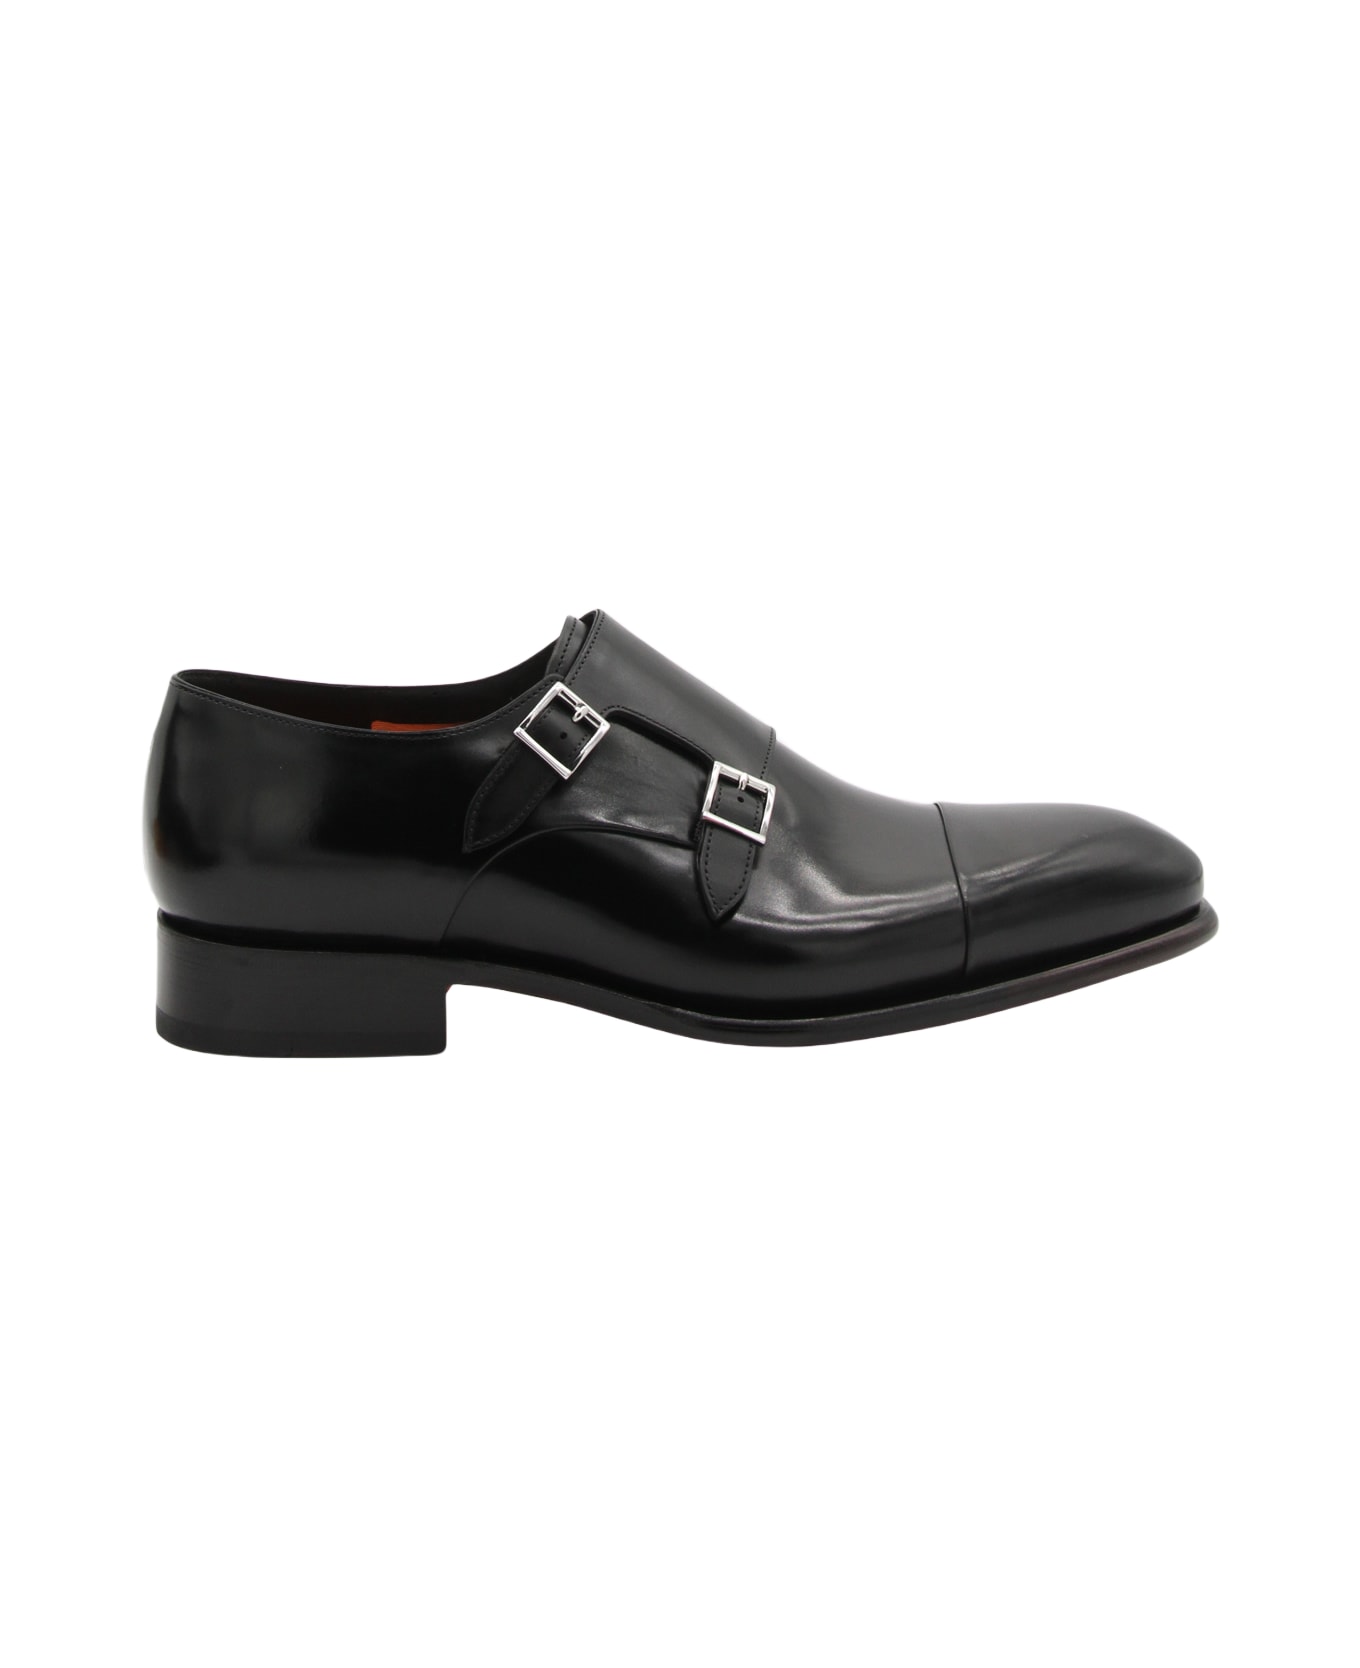 Santoni Black Leather Formal Shoes - Black